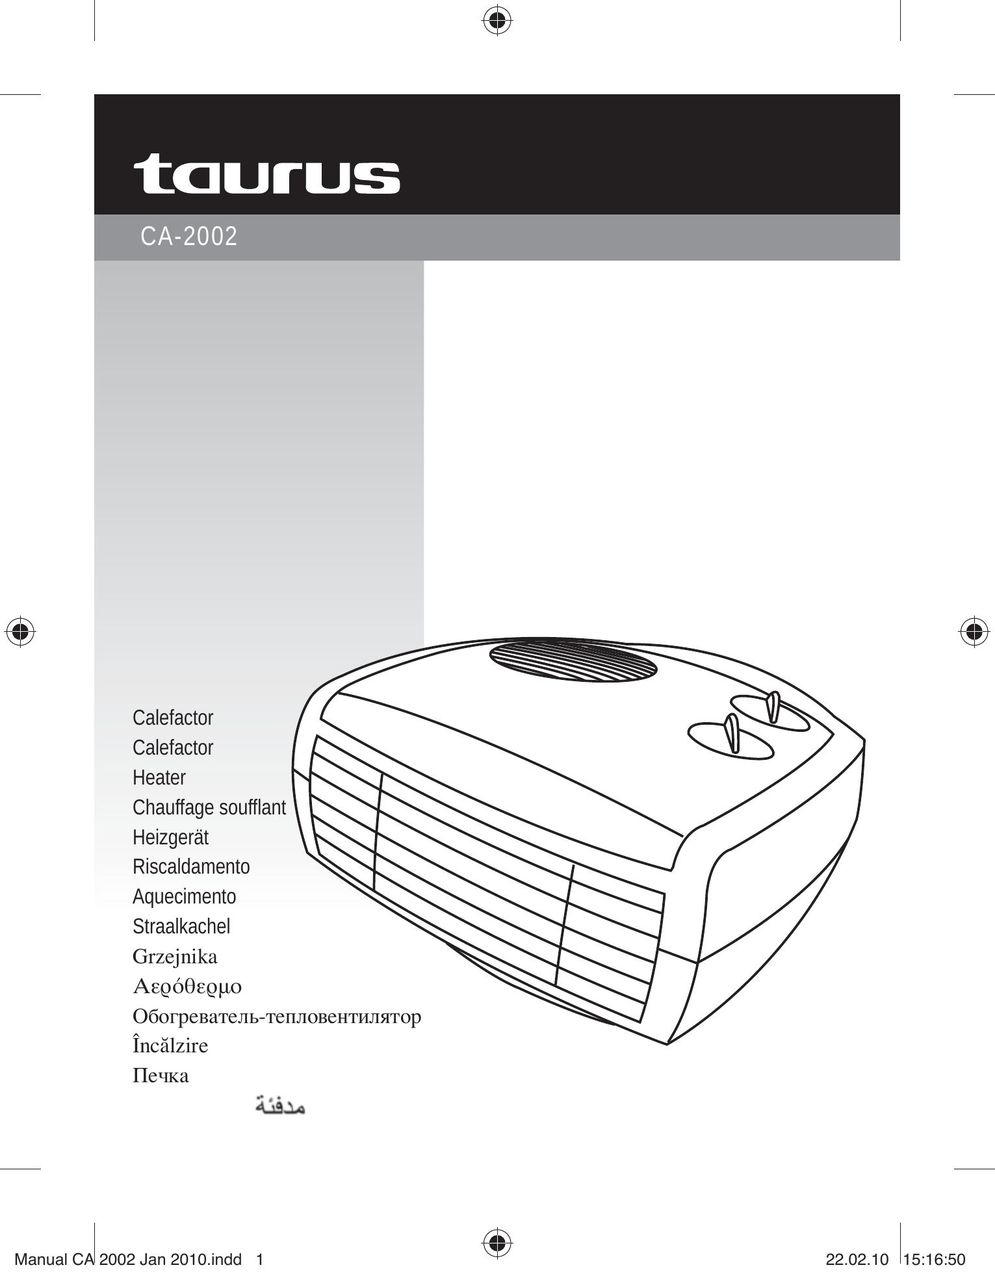 Taurus Group CA-2002 Electric Heater User Manual